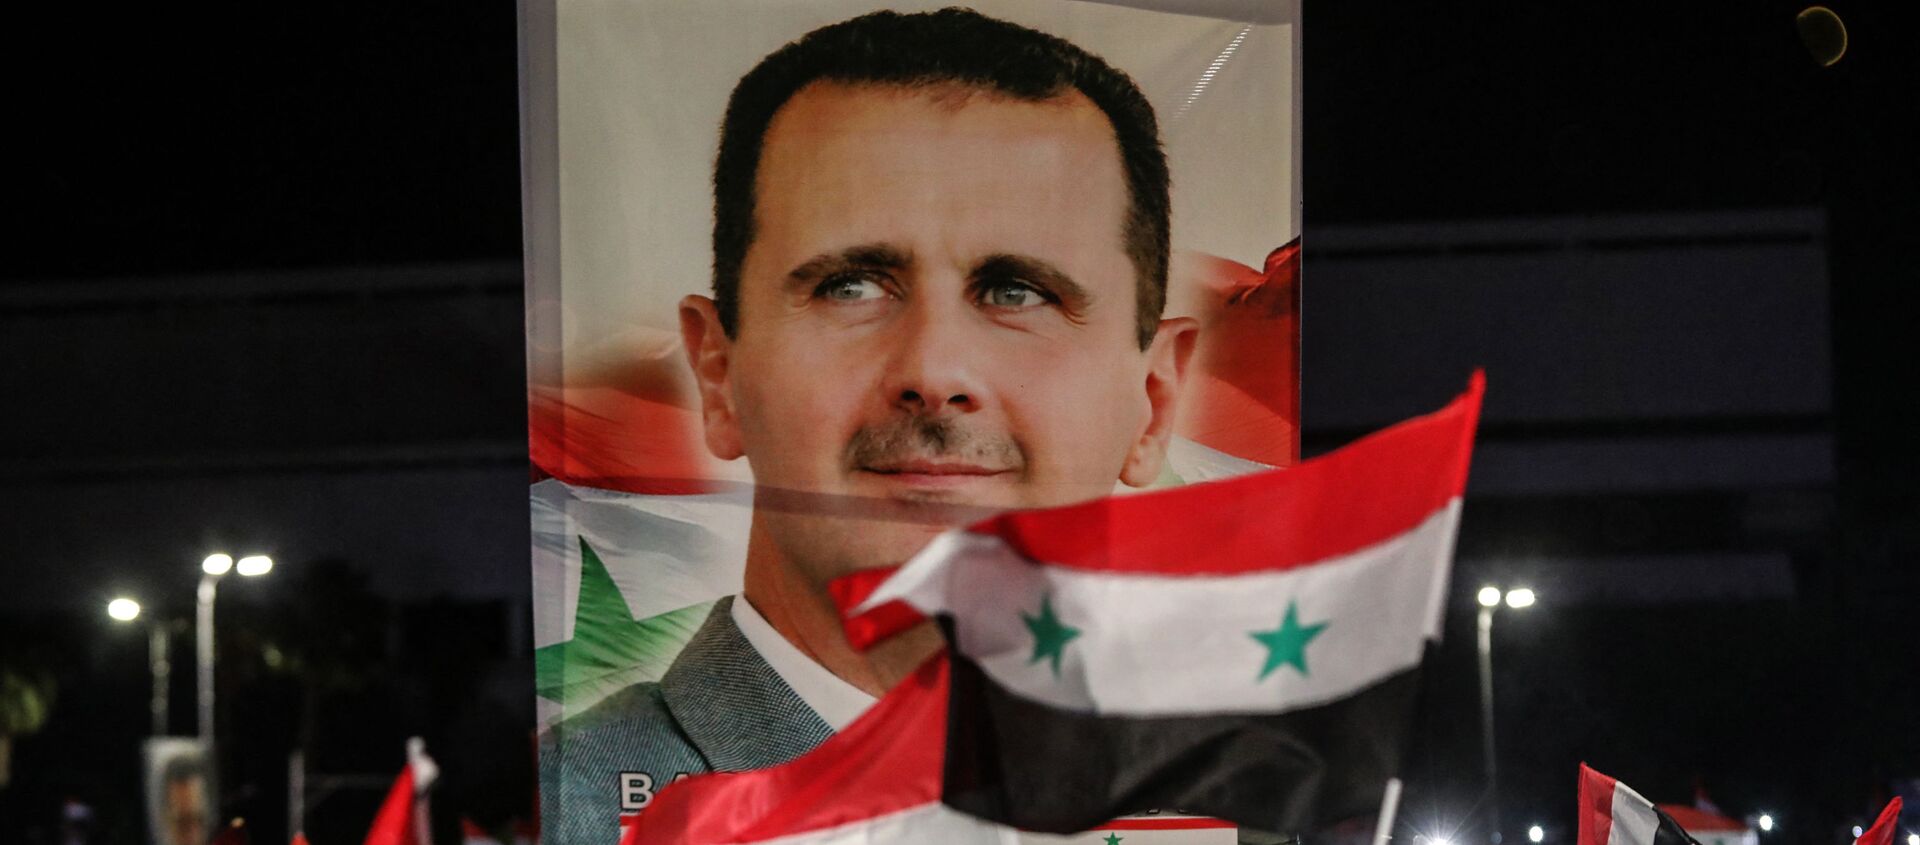 Сирийцы празднуют победу Башара Асада на выборах президента - Sputnik Беларусь, 1920, 28.05.2021